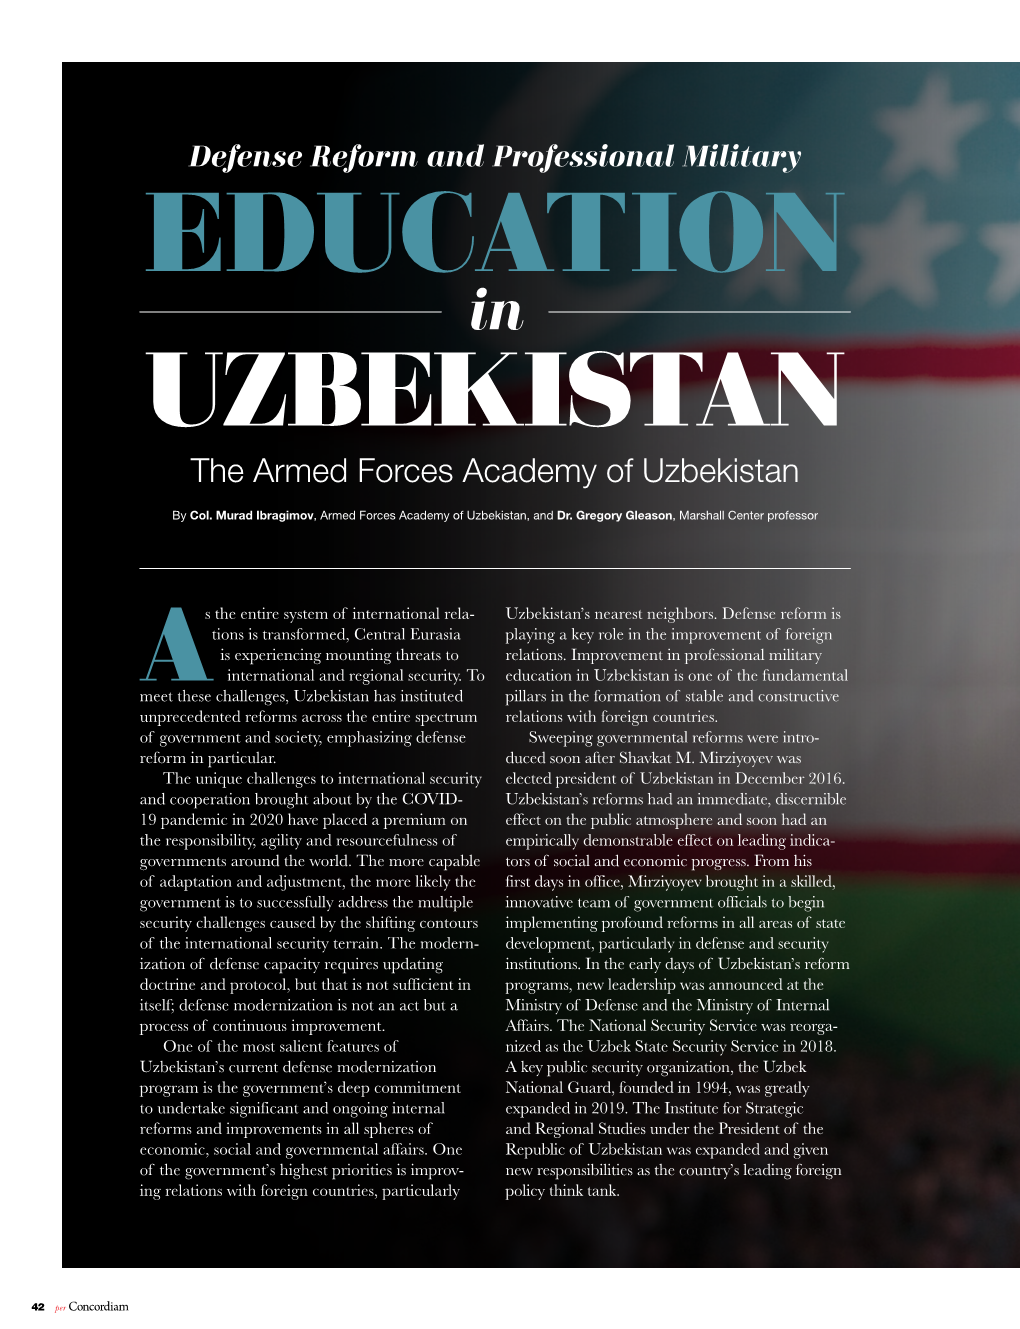 EDUCATION in UZBEKISTAN the Armed Forces Academy of Uzbekistan